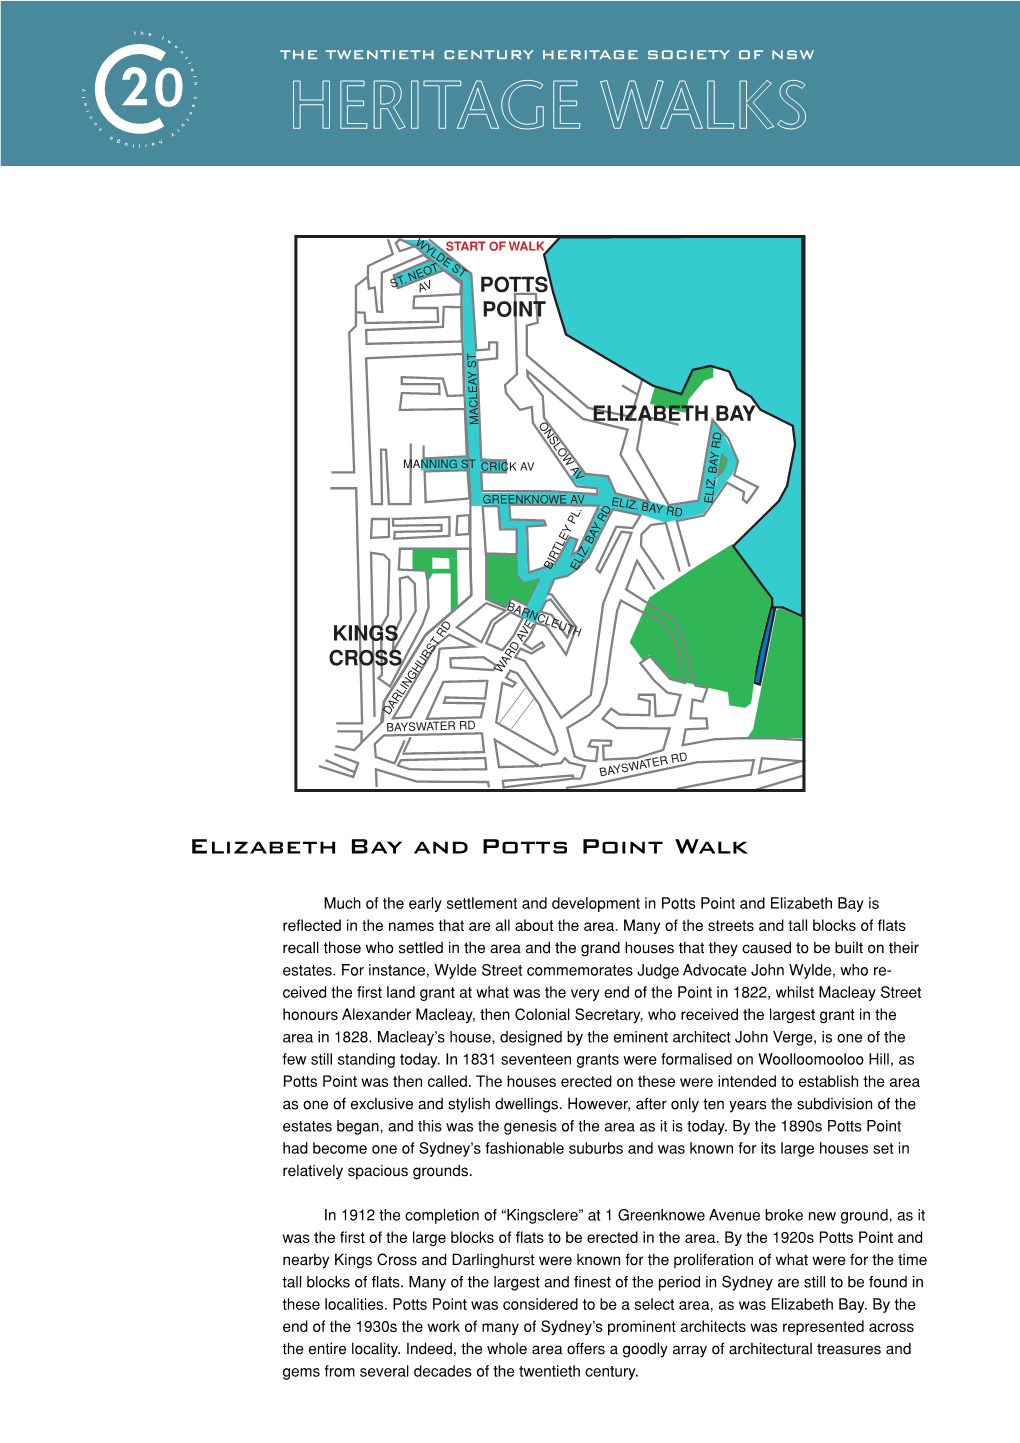 Elizabeth Bay and Potts Point Walk